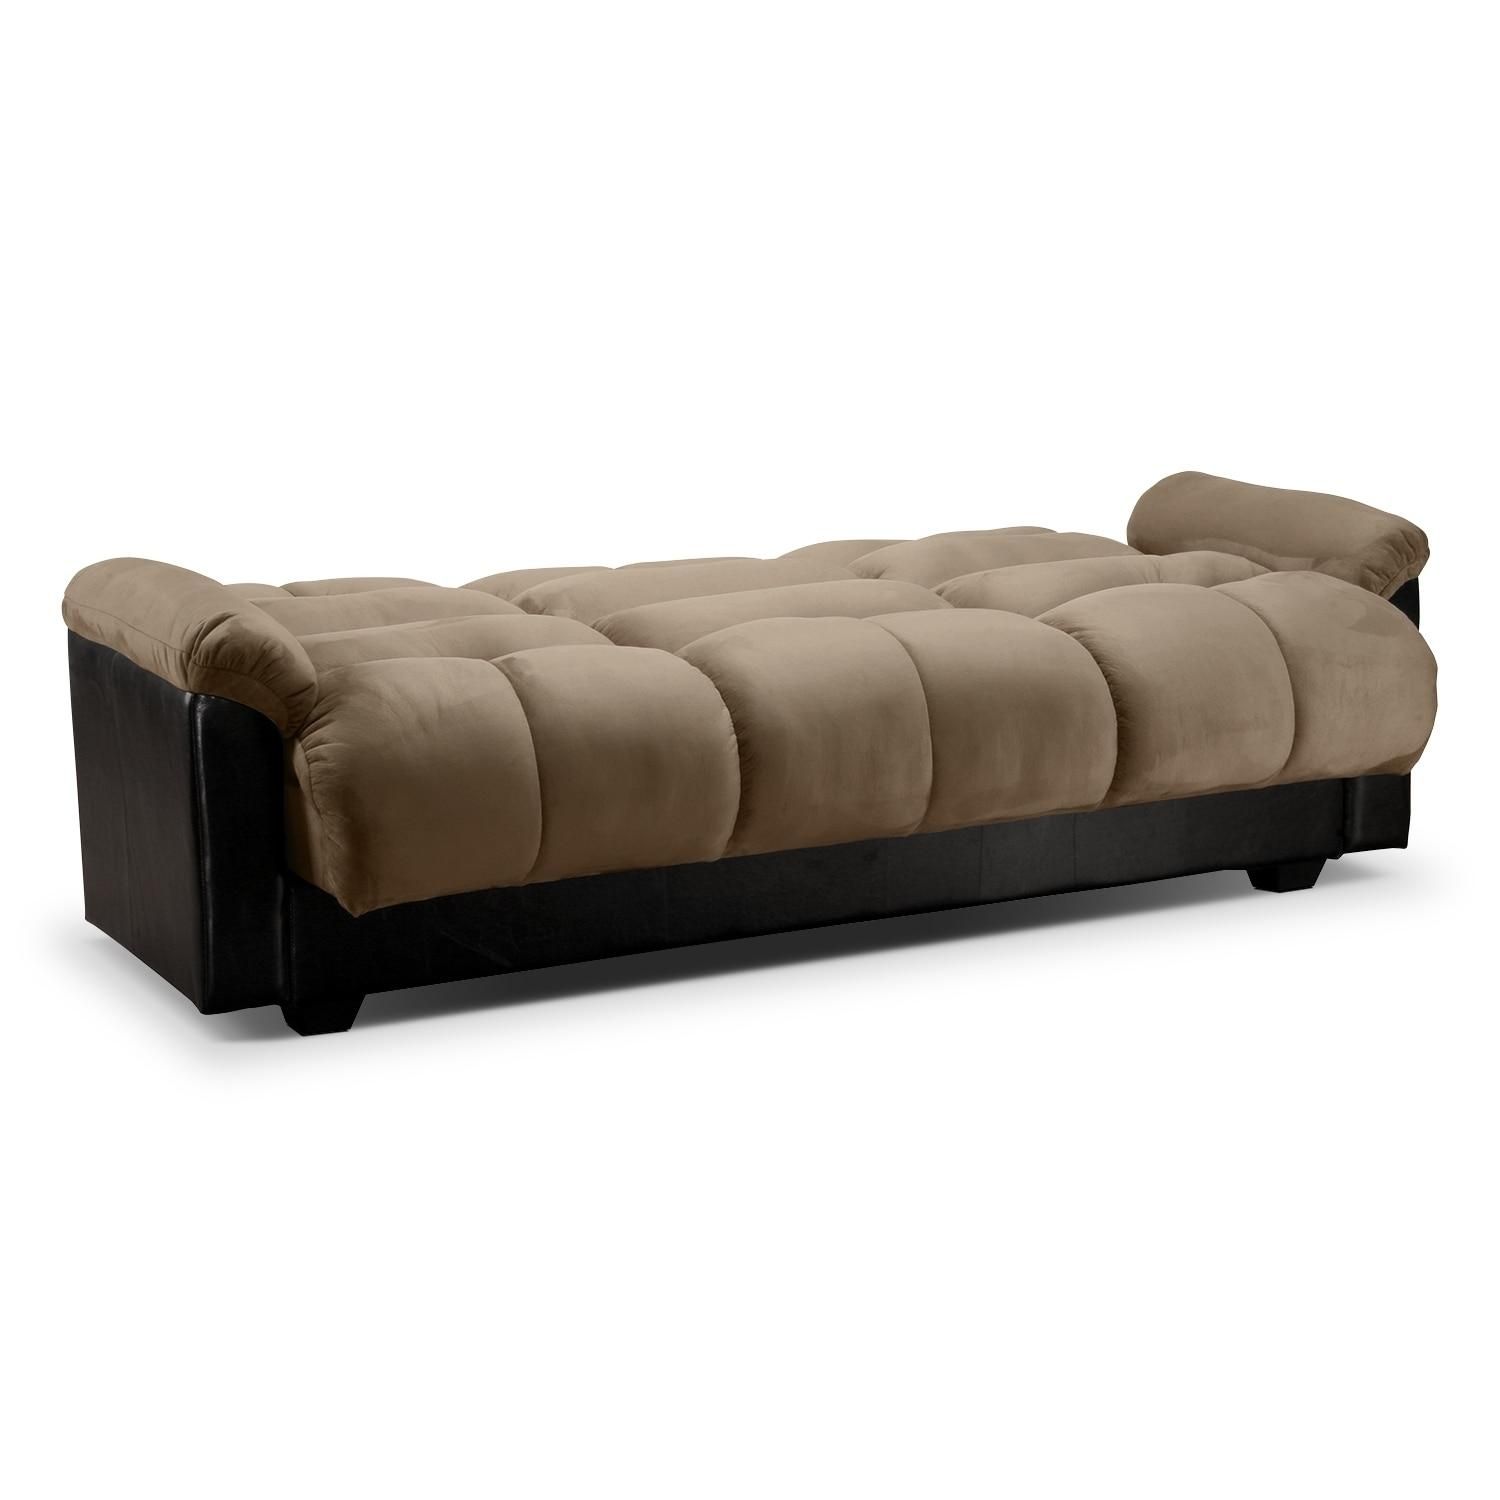 Ara Futon Sofa Bed With Storage – Hazelnut | Value City Furniture Within Fulton Sofa Beds (View 16 of 21)